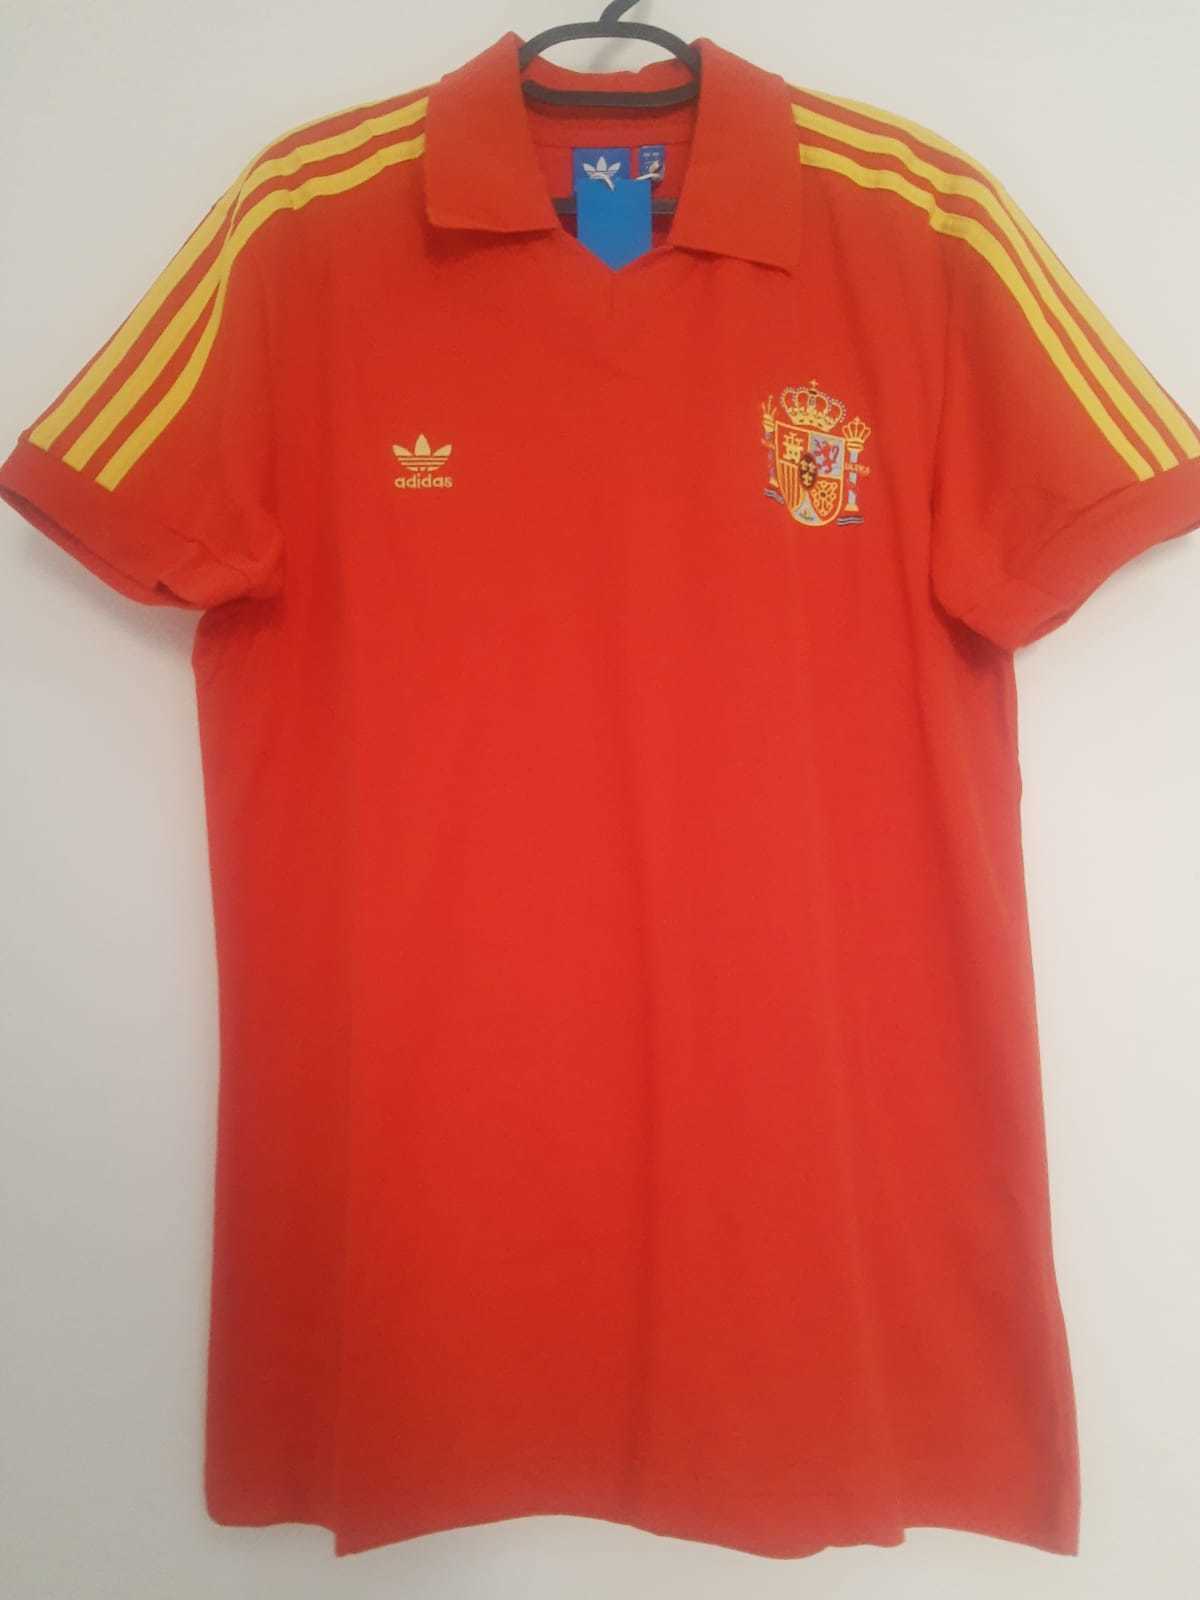 Jersey / Shirt Spain World Cup 1982 Jesus Maria Zamora 10 - Adidas Originals - $200.00